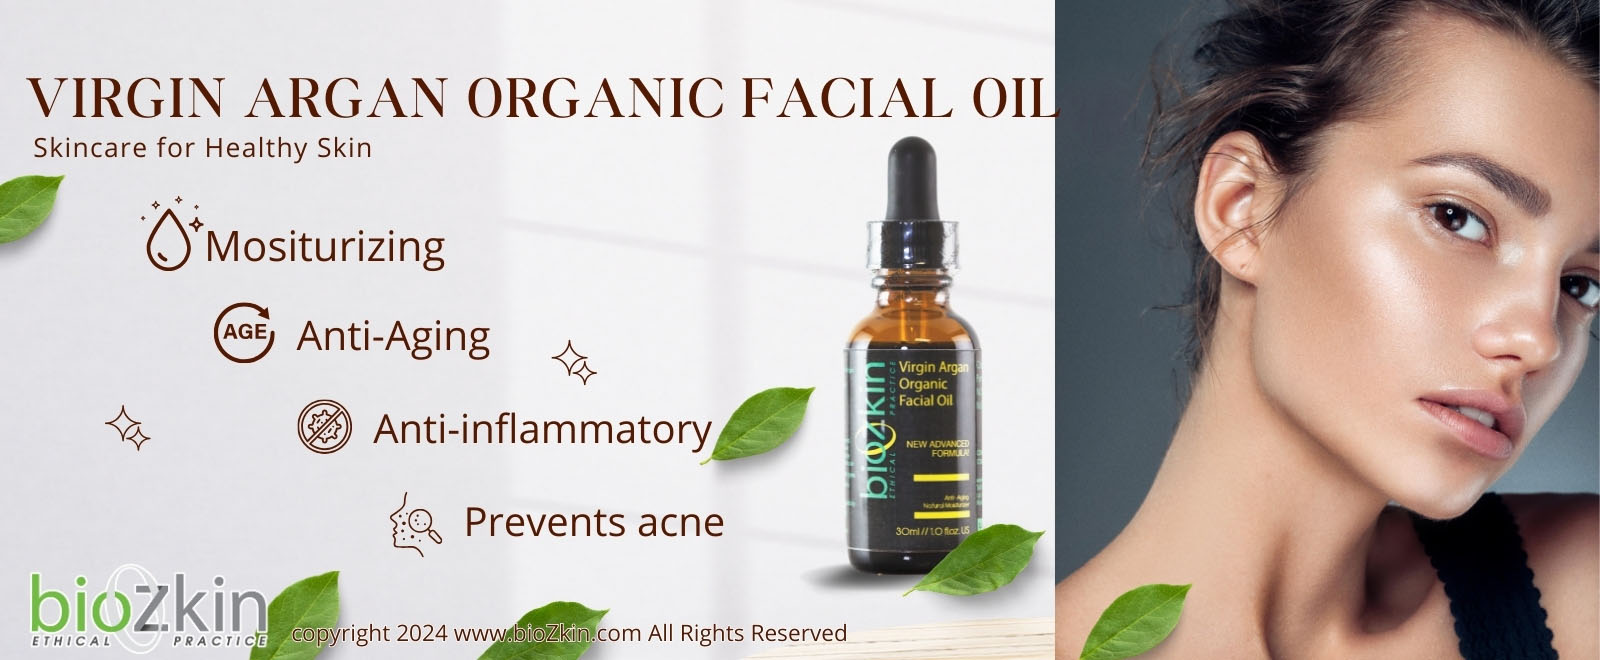 Virgin Argan Organic Facial Oil - BioZkin